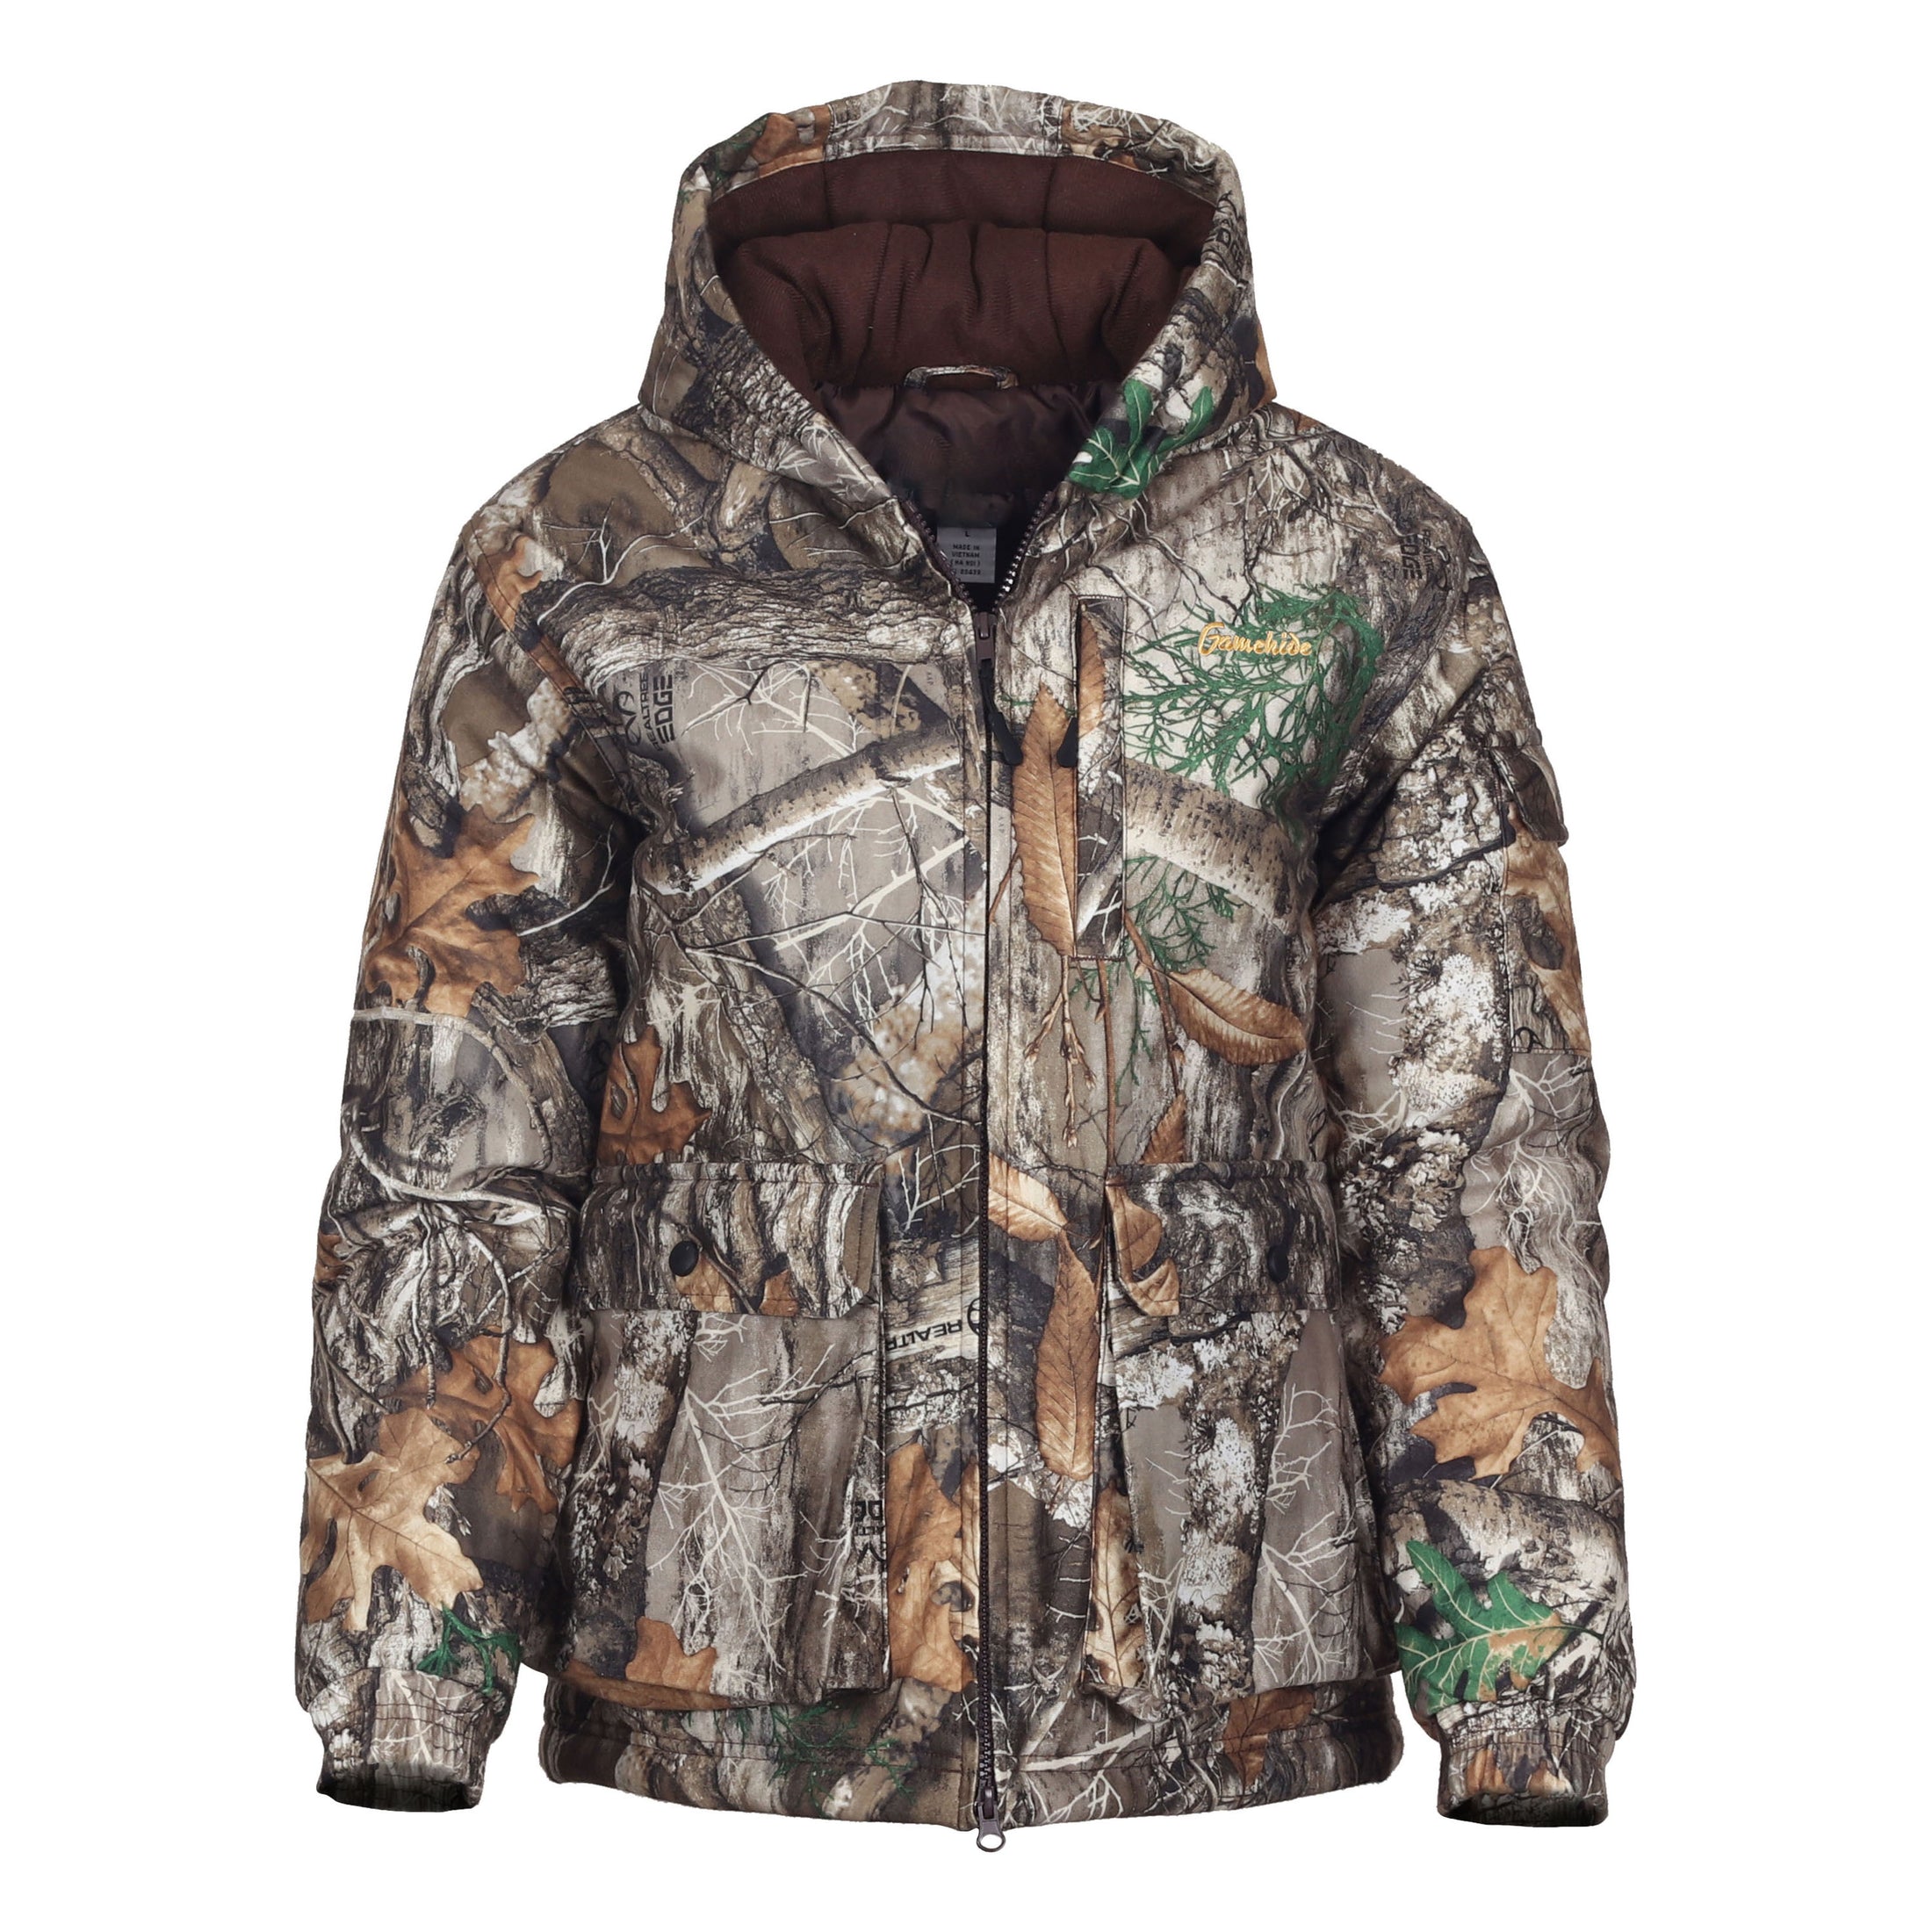 Gamehide youth tundra jacket (realtree edge).